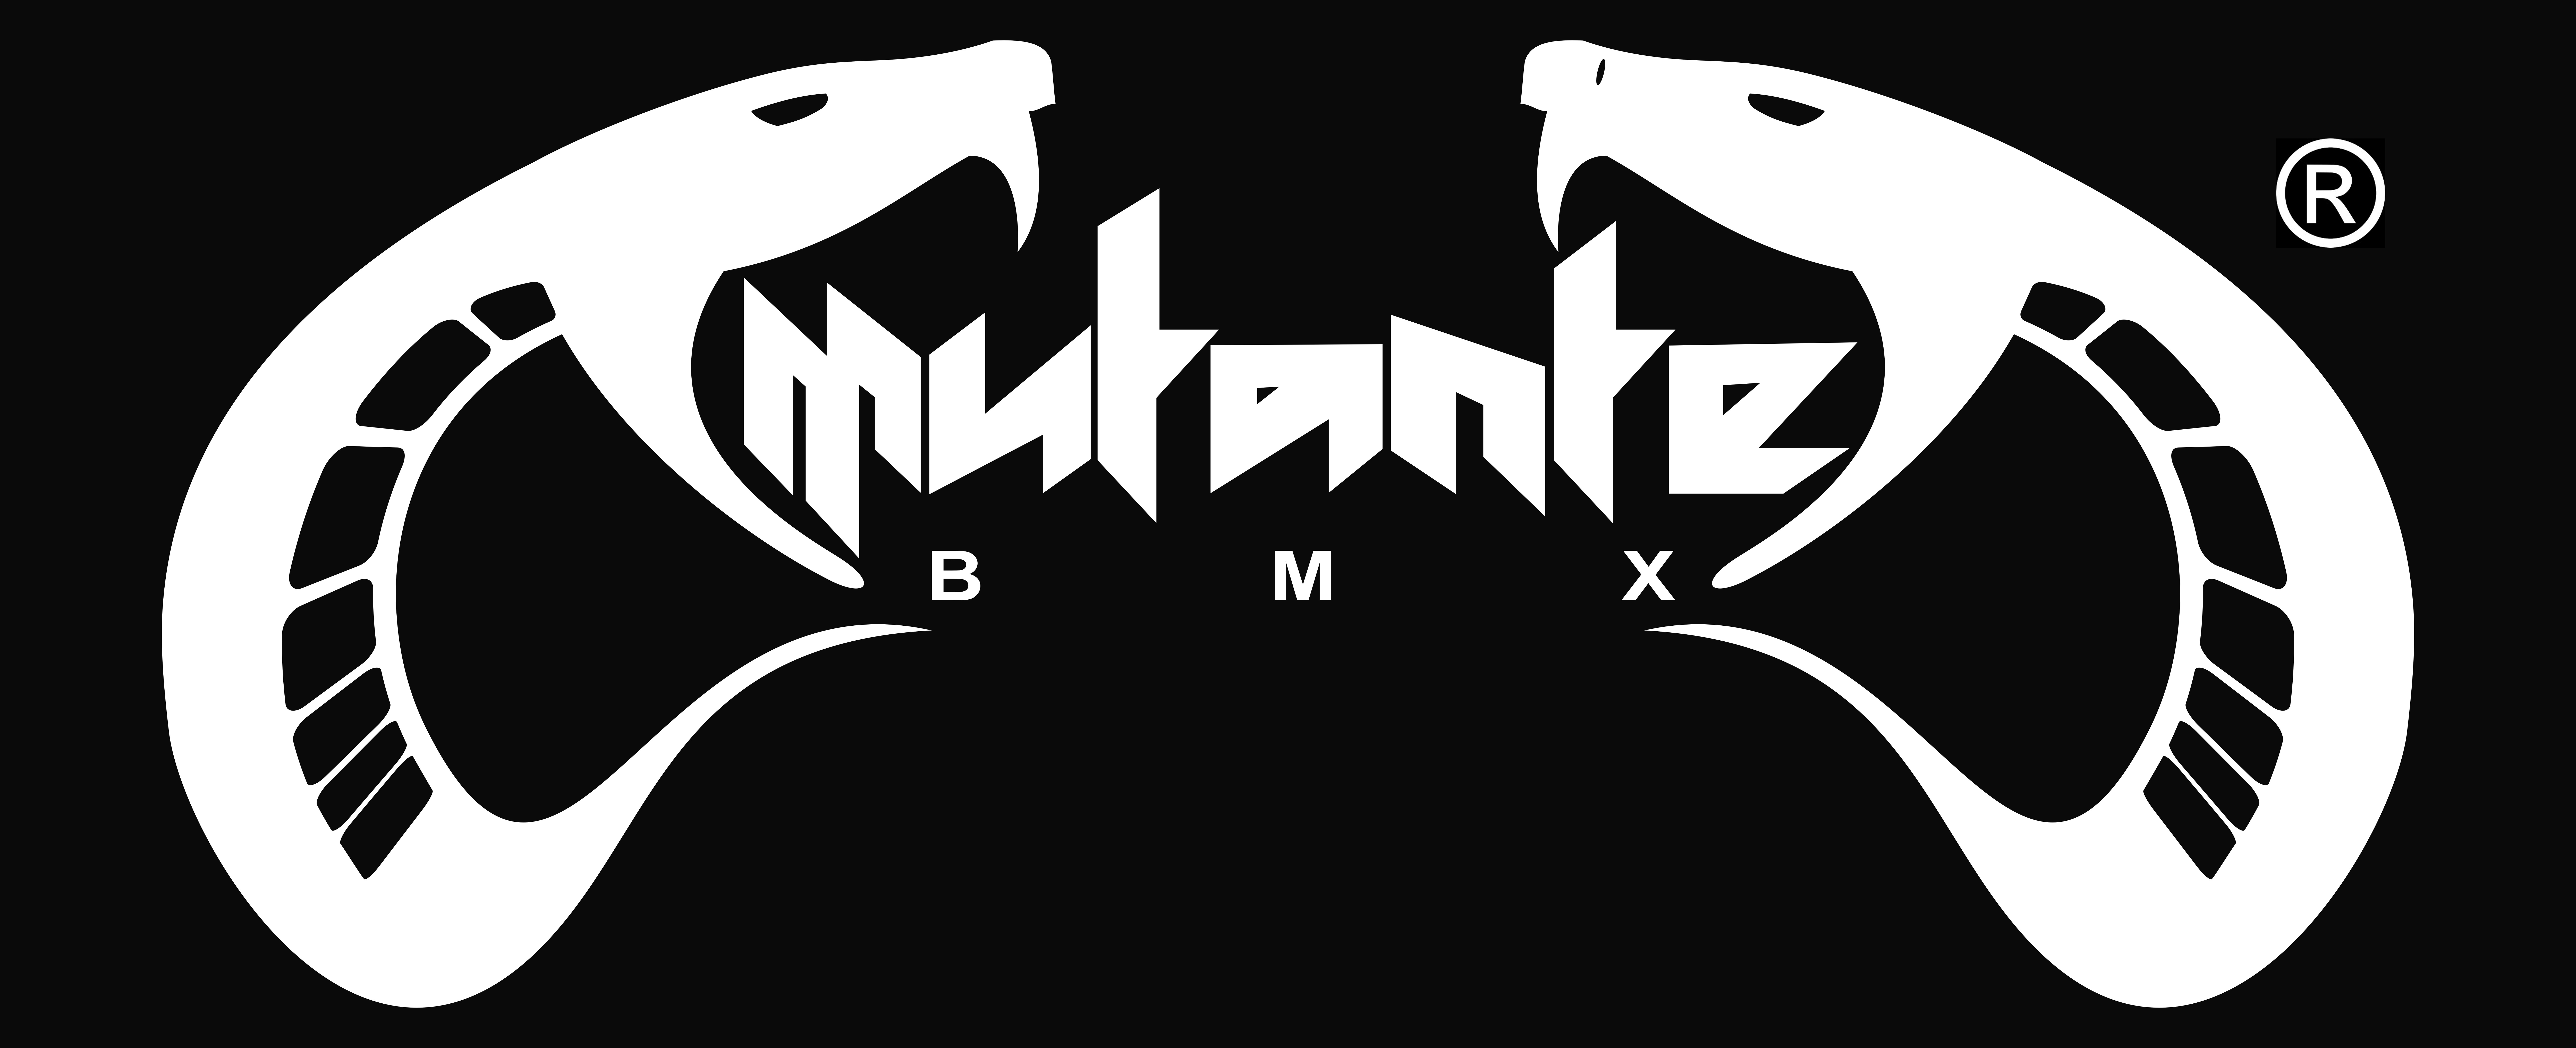 Mutante BMX, Marca registrada! Propietario: Ramon Alejandro Vazquez Estrada